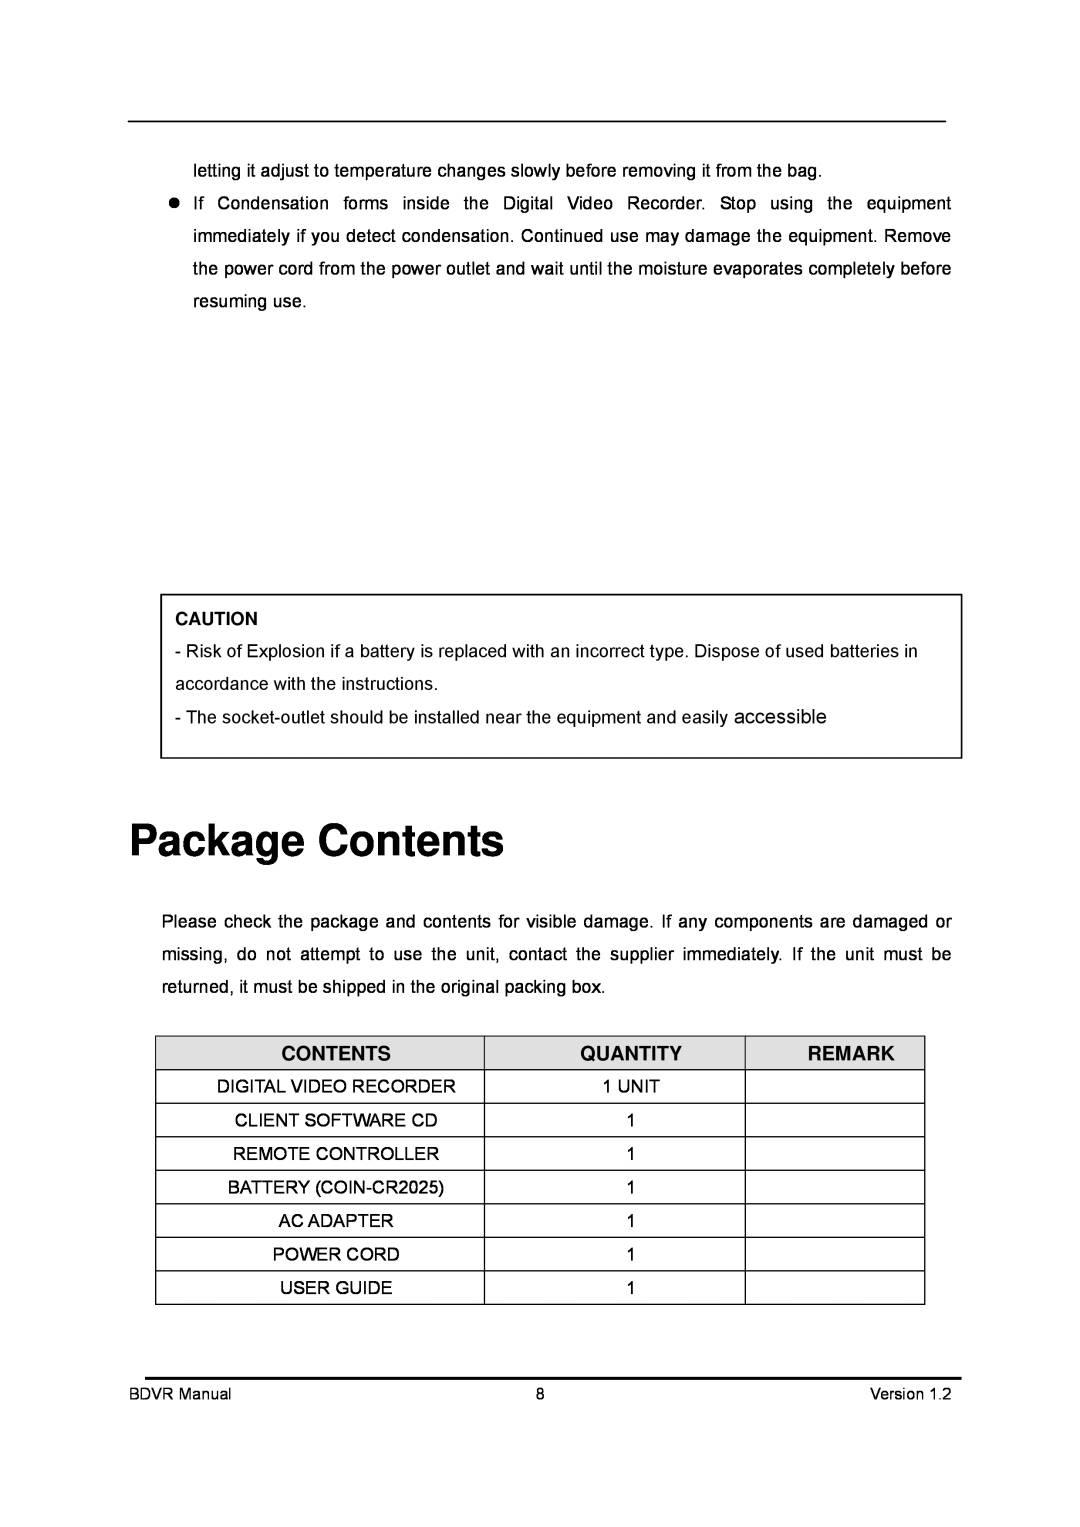 Genie BDVR-8, BDVR-16, BDVR-4 manual Package Contents, Quantity, Remark 